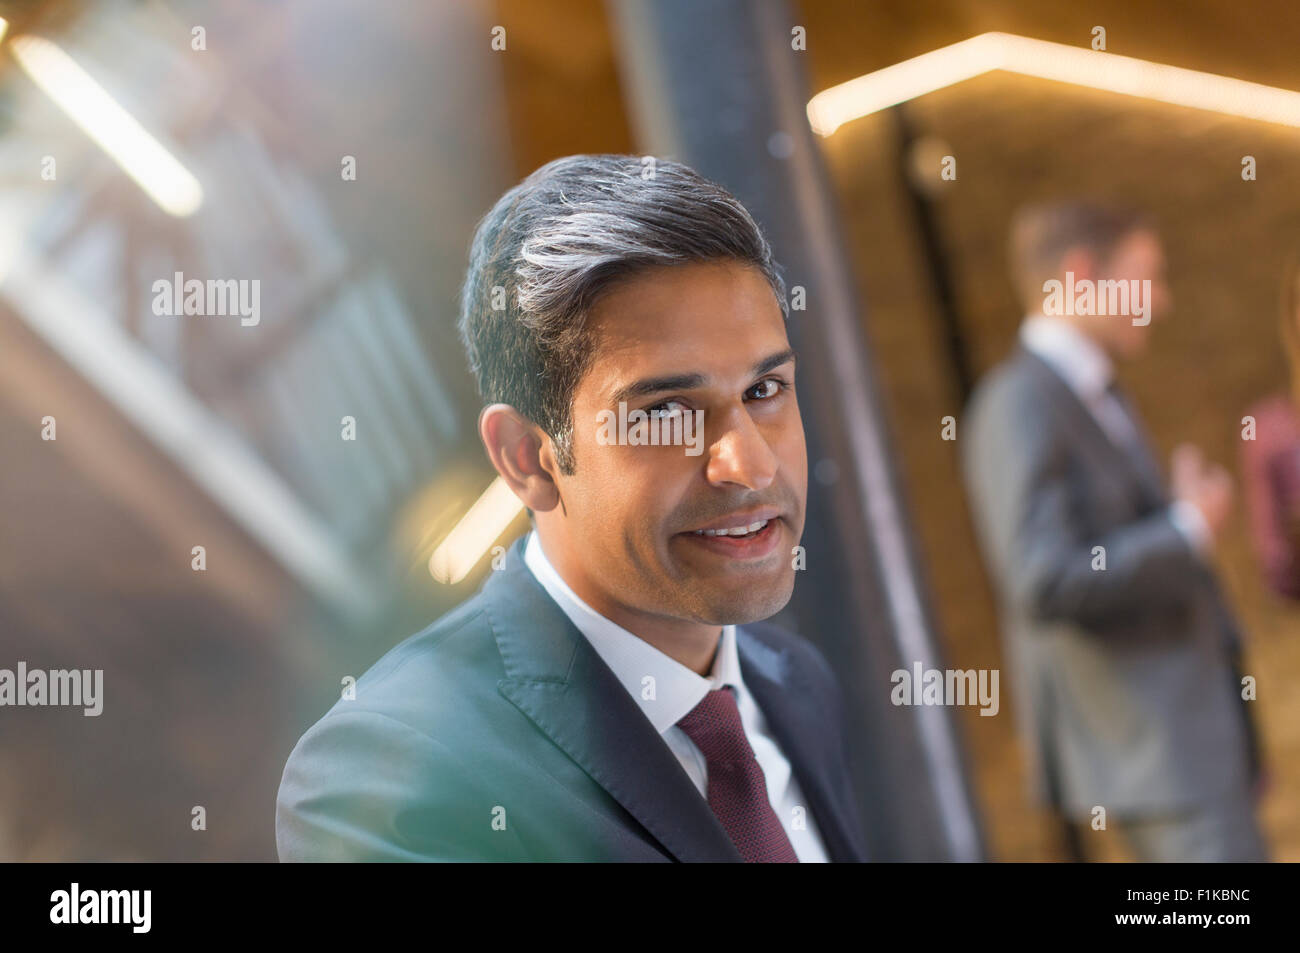 Portrait of smiling businessman in office Banque D'Images